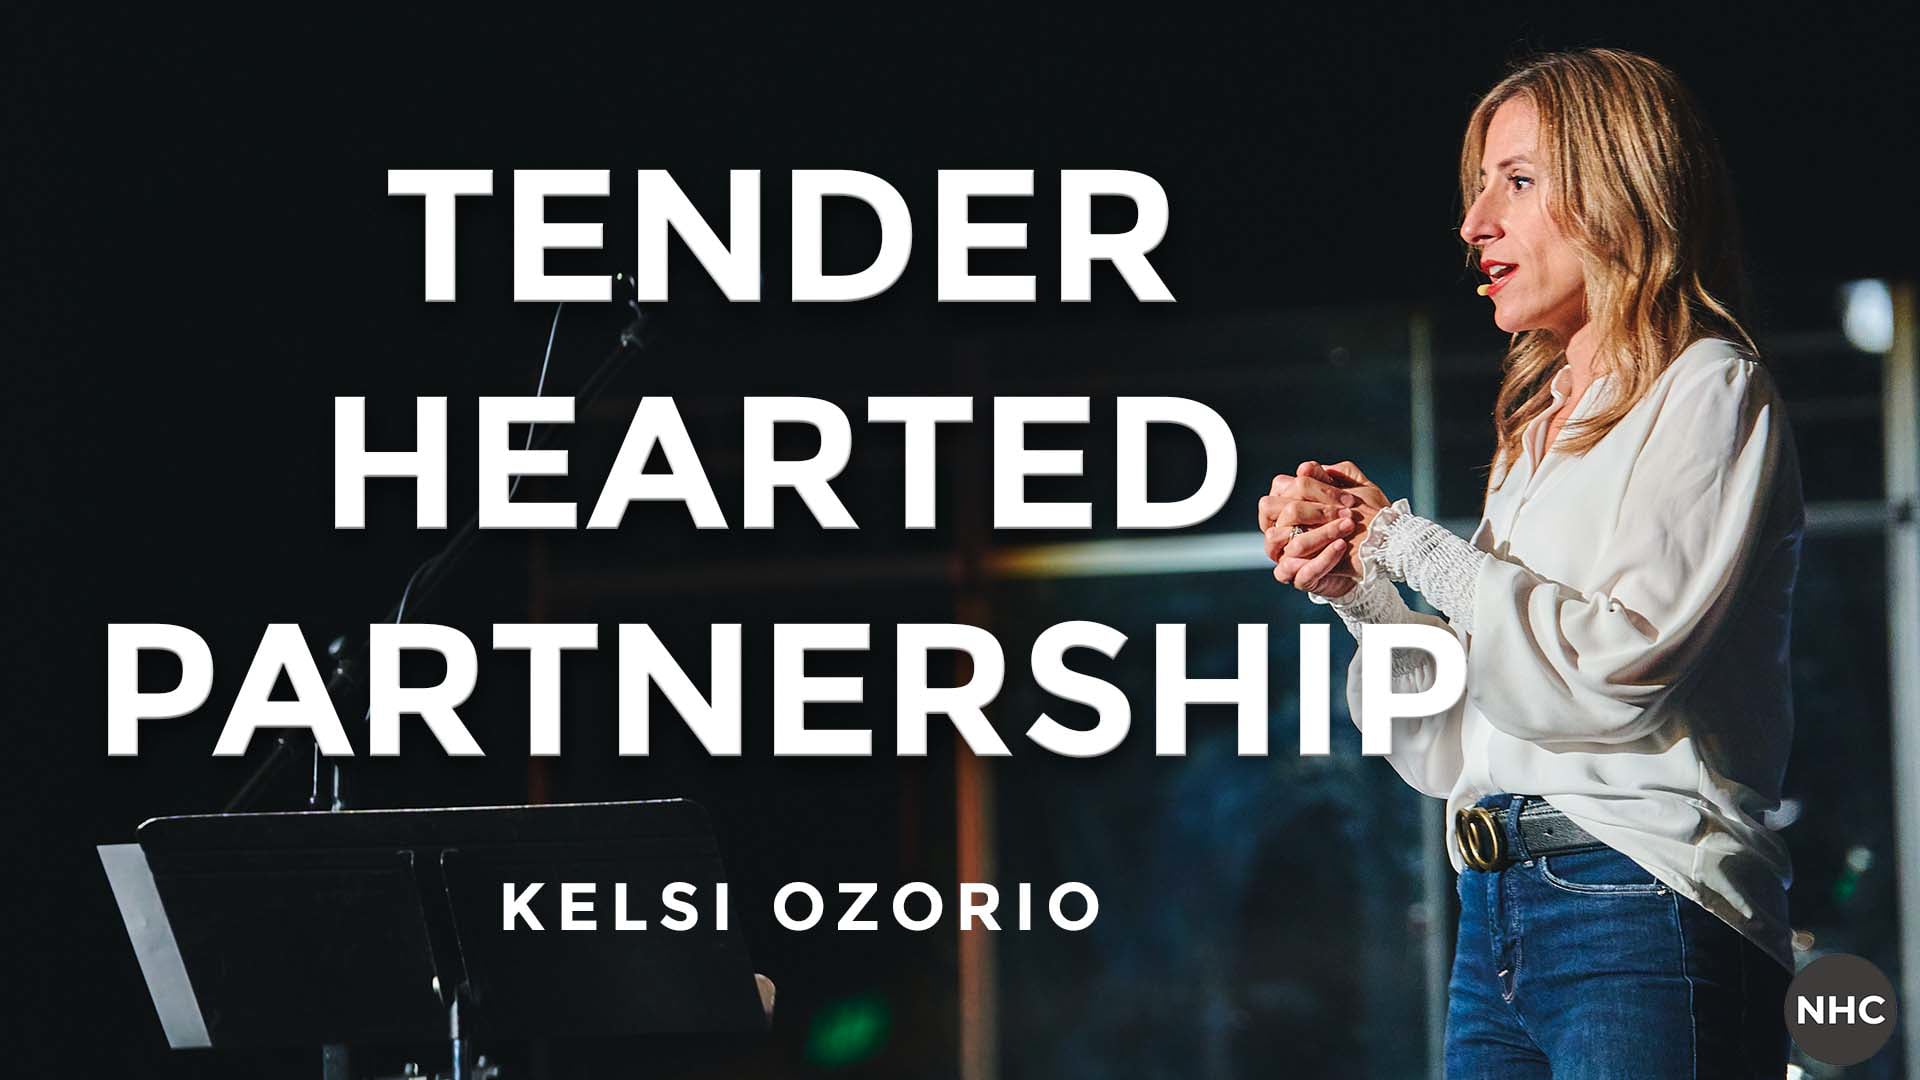 Tender Hearted Partnership